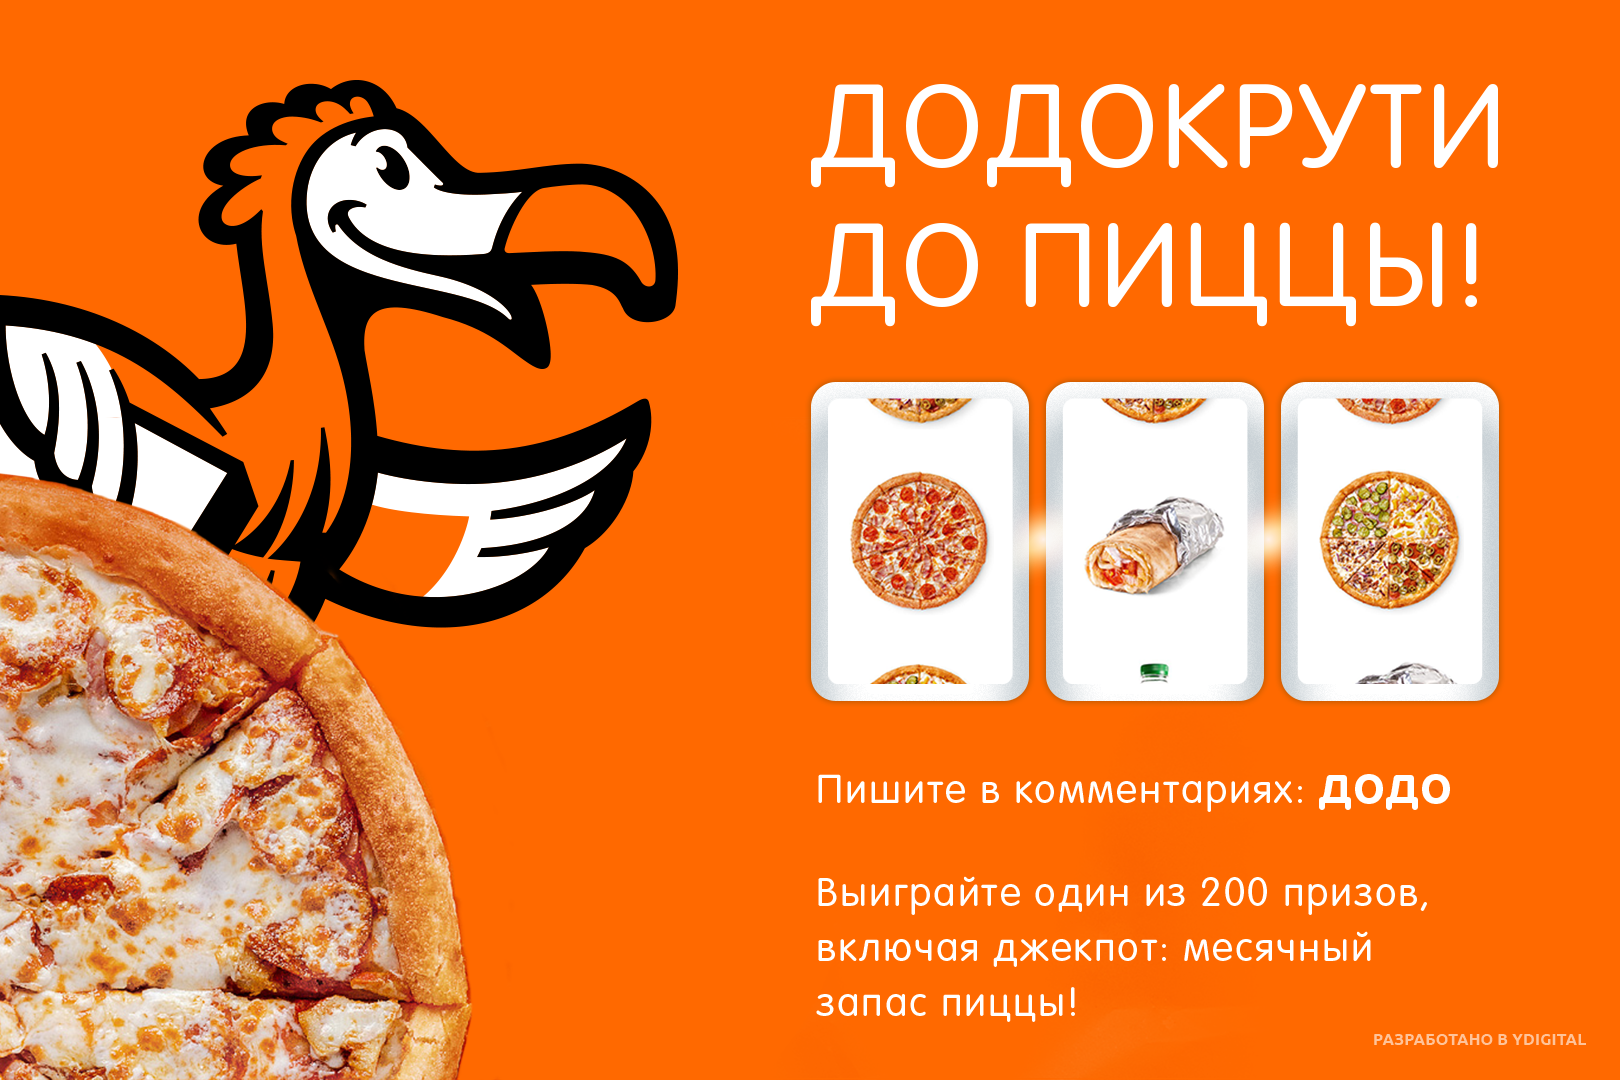 Додо кск. Додо пицца реклама. Рекламная листовка Додо пицца. Додо пицца картинки. Баннеры рекламные Додо пиццерии.